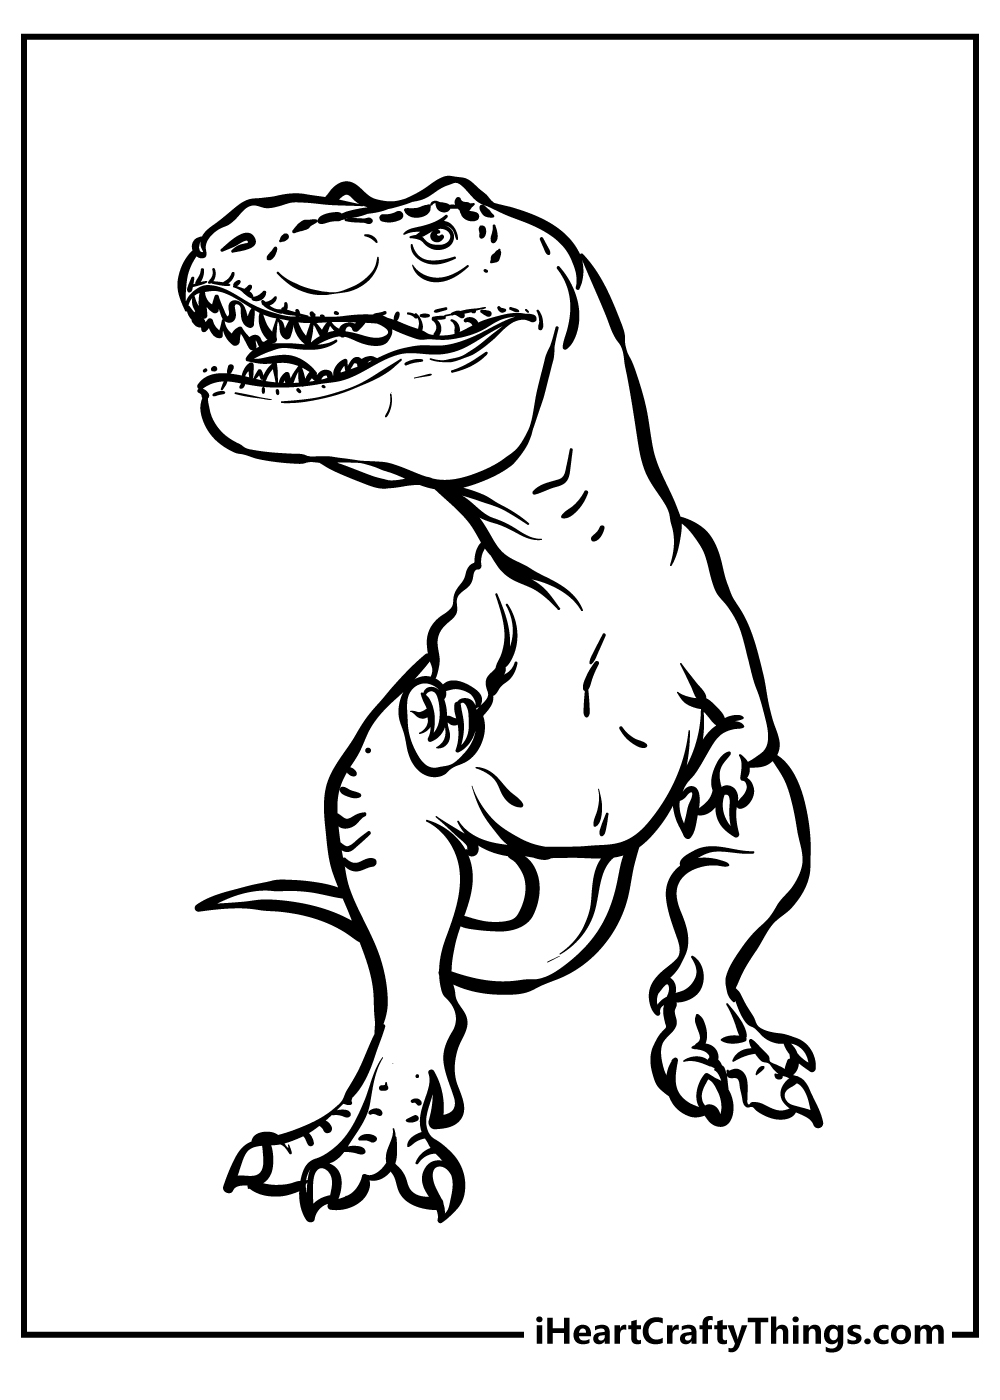 Jurassic World Coloring Original Sheet for children free download